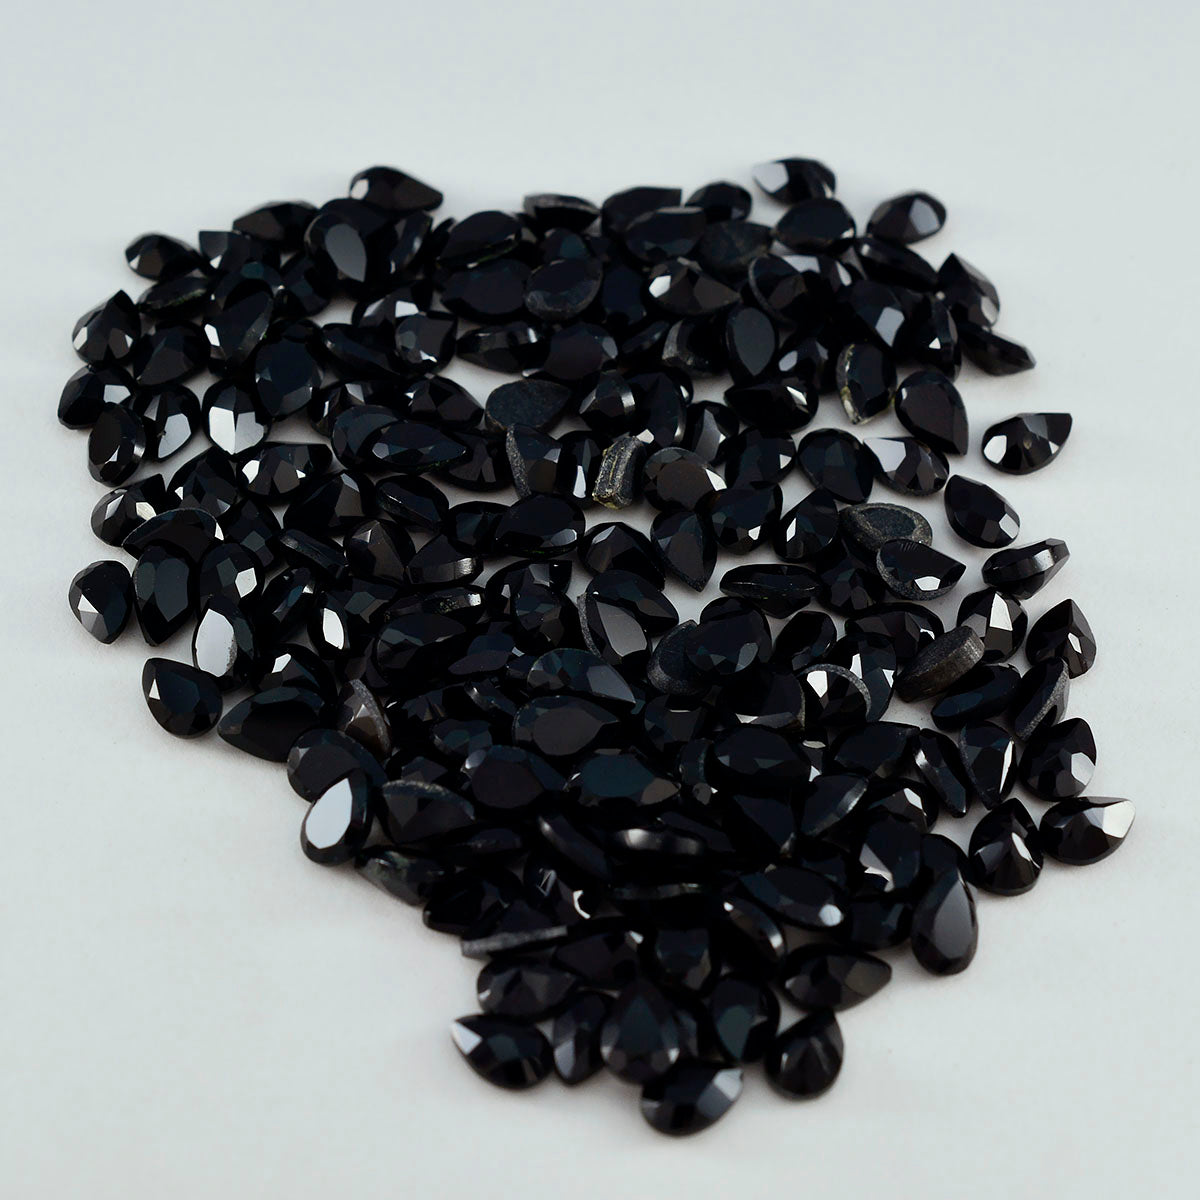 Riyogems 1PC Genuine Black Onyx Faceted 3x5 mm Pear Shape amazing Quality Loose Gems